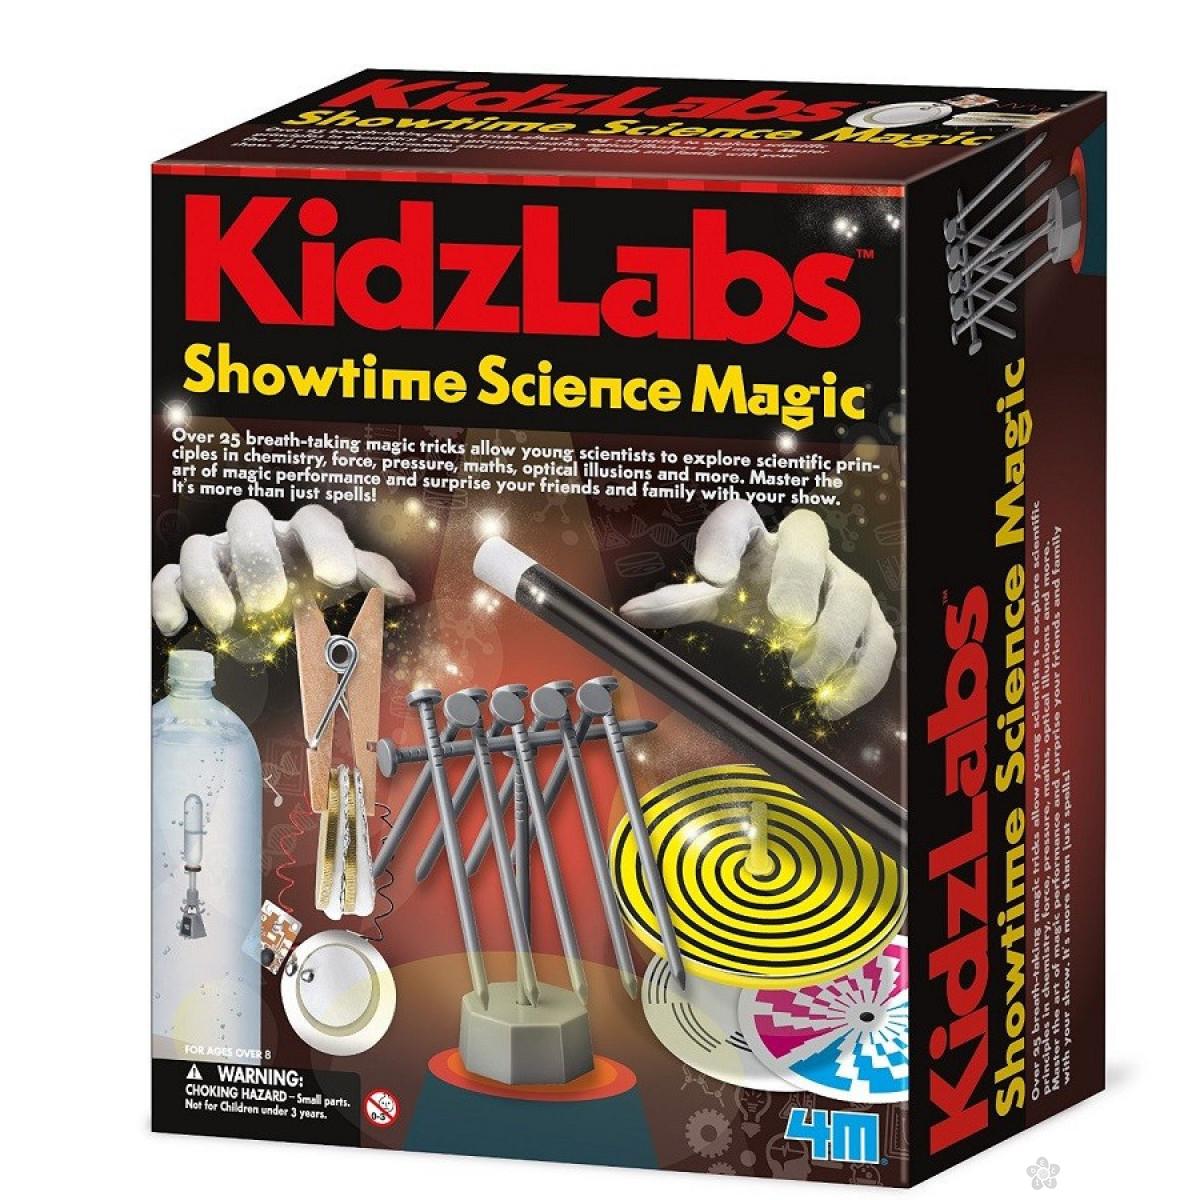 Kidzlabs Showtime Scicence Magic 4M05530 